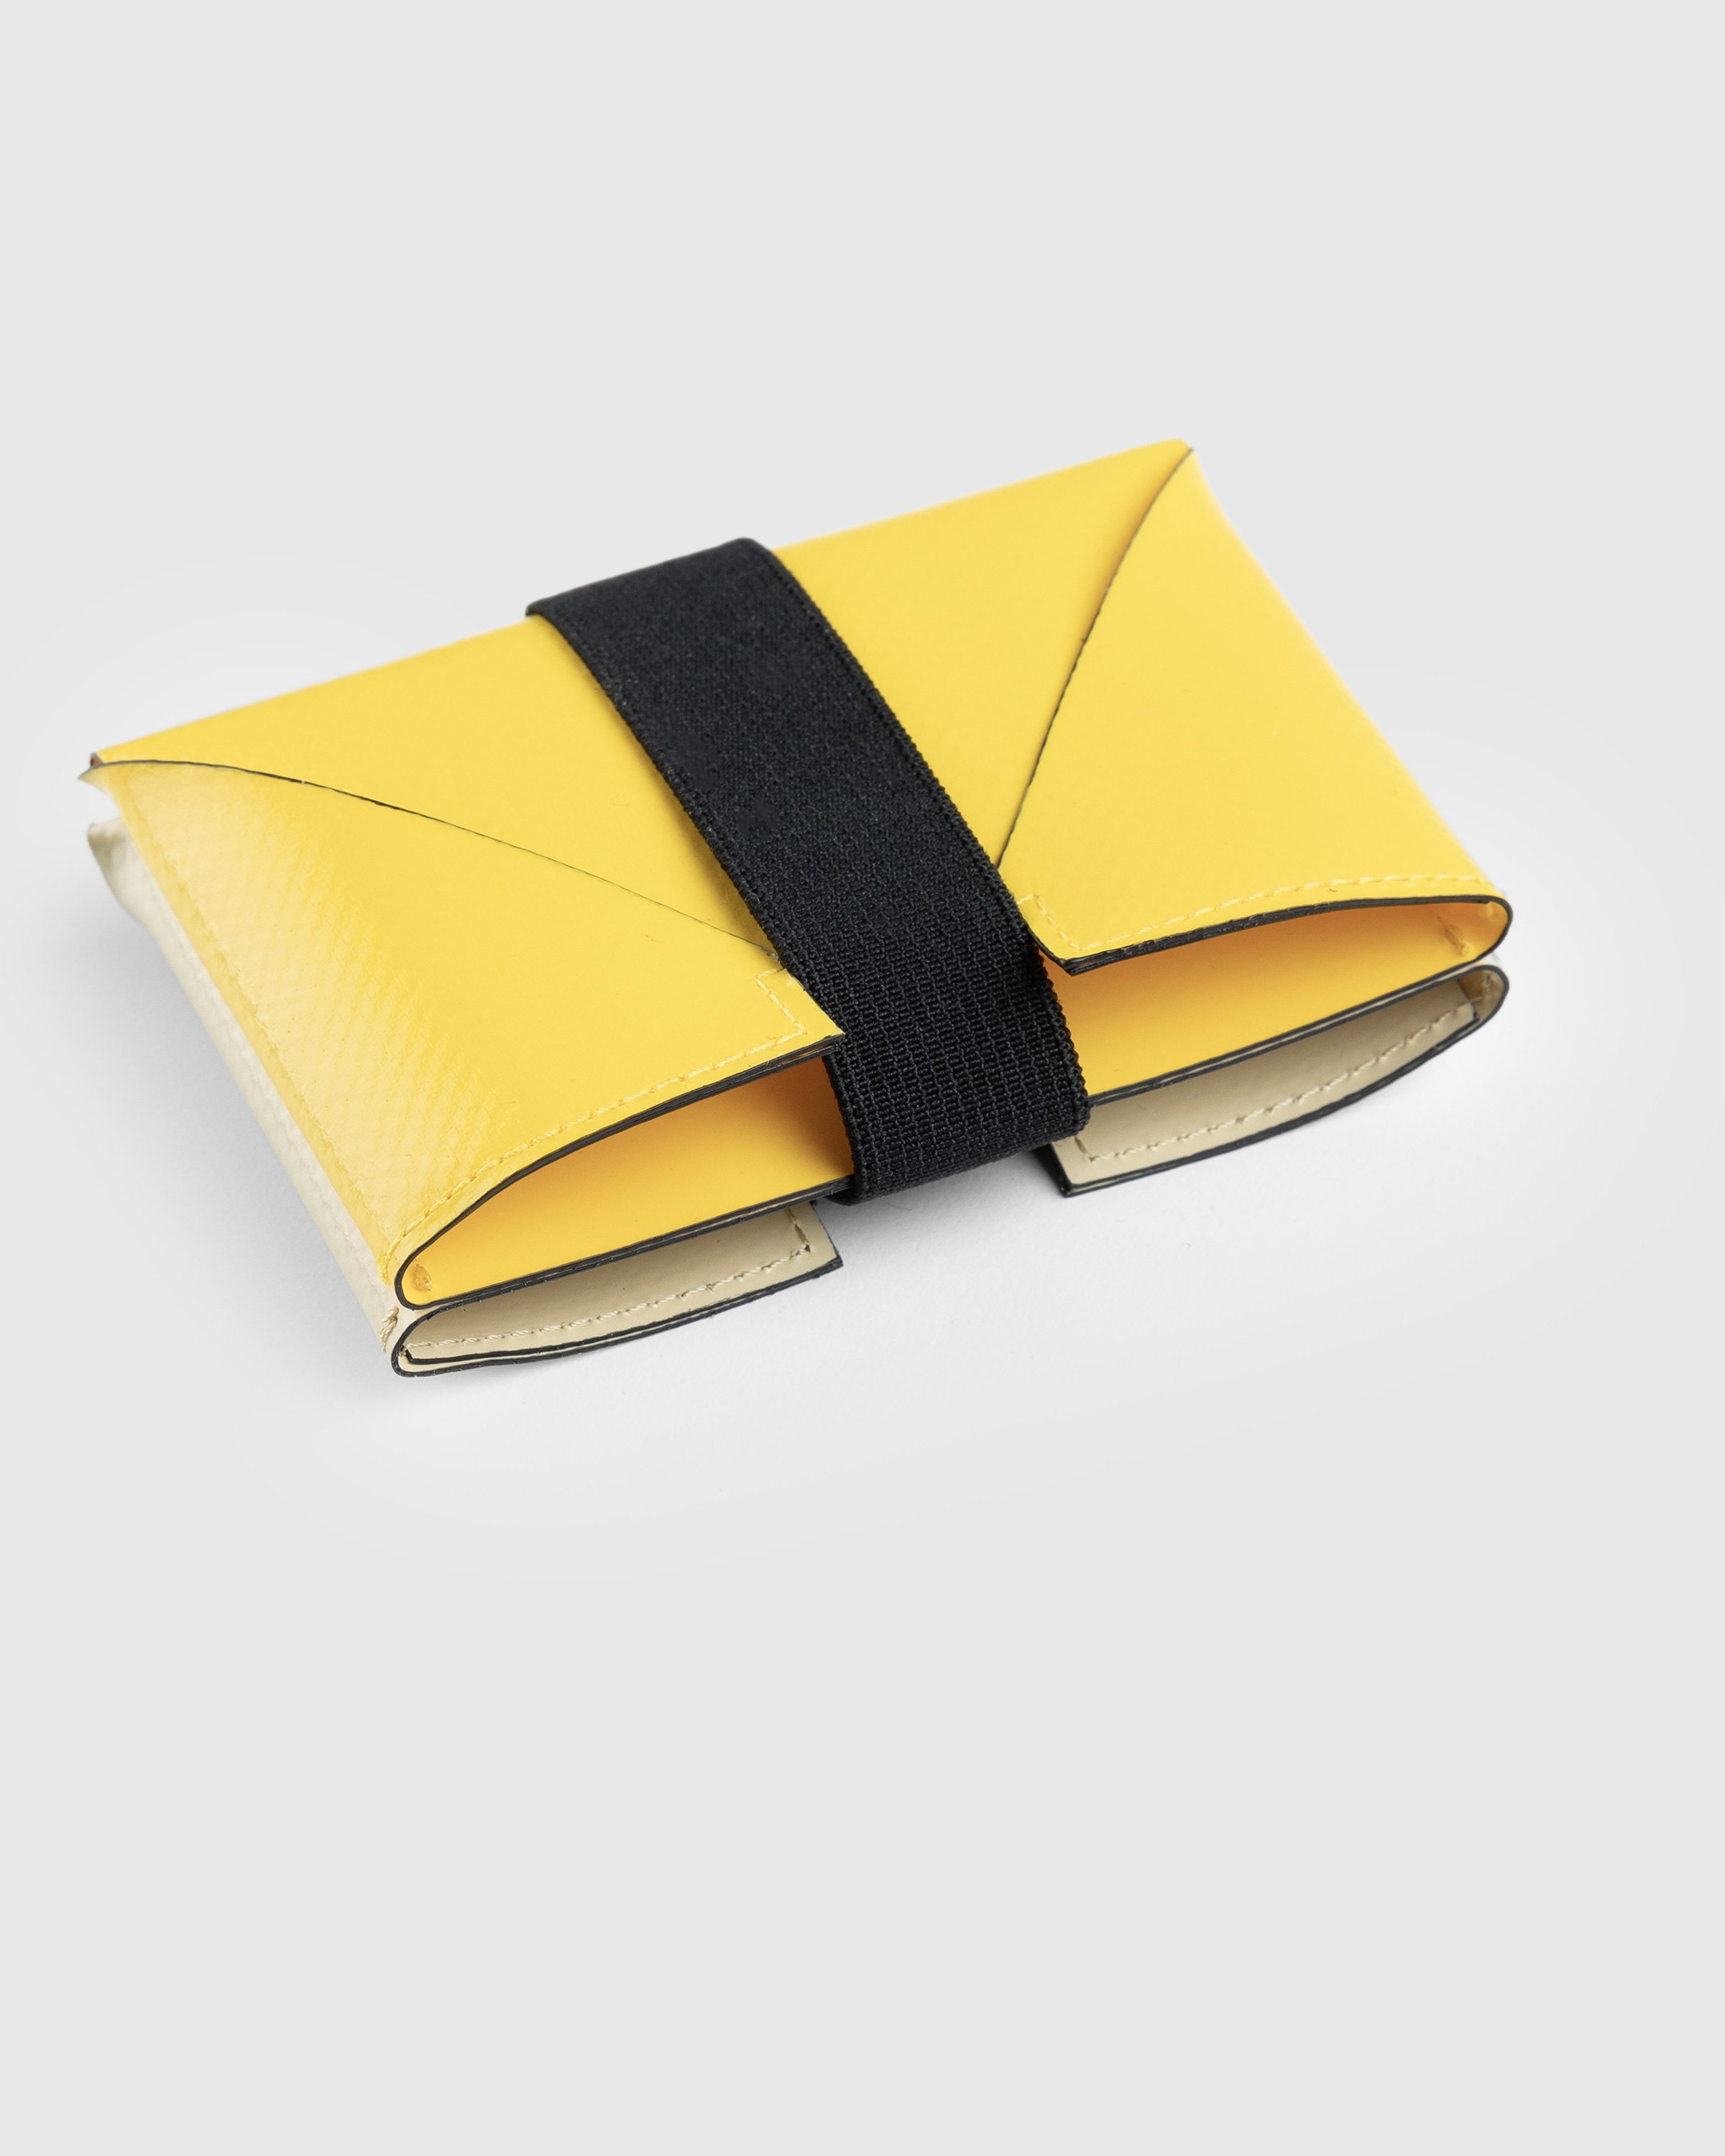 Marni – Origami Card Holder Beige | Highsnobiety Shop